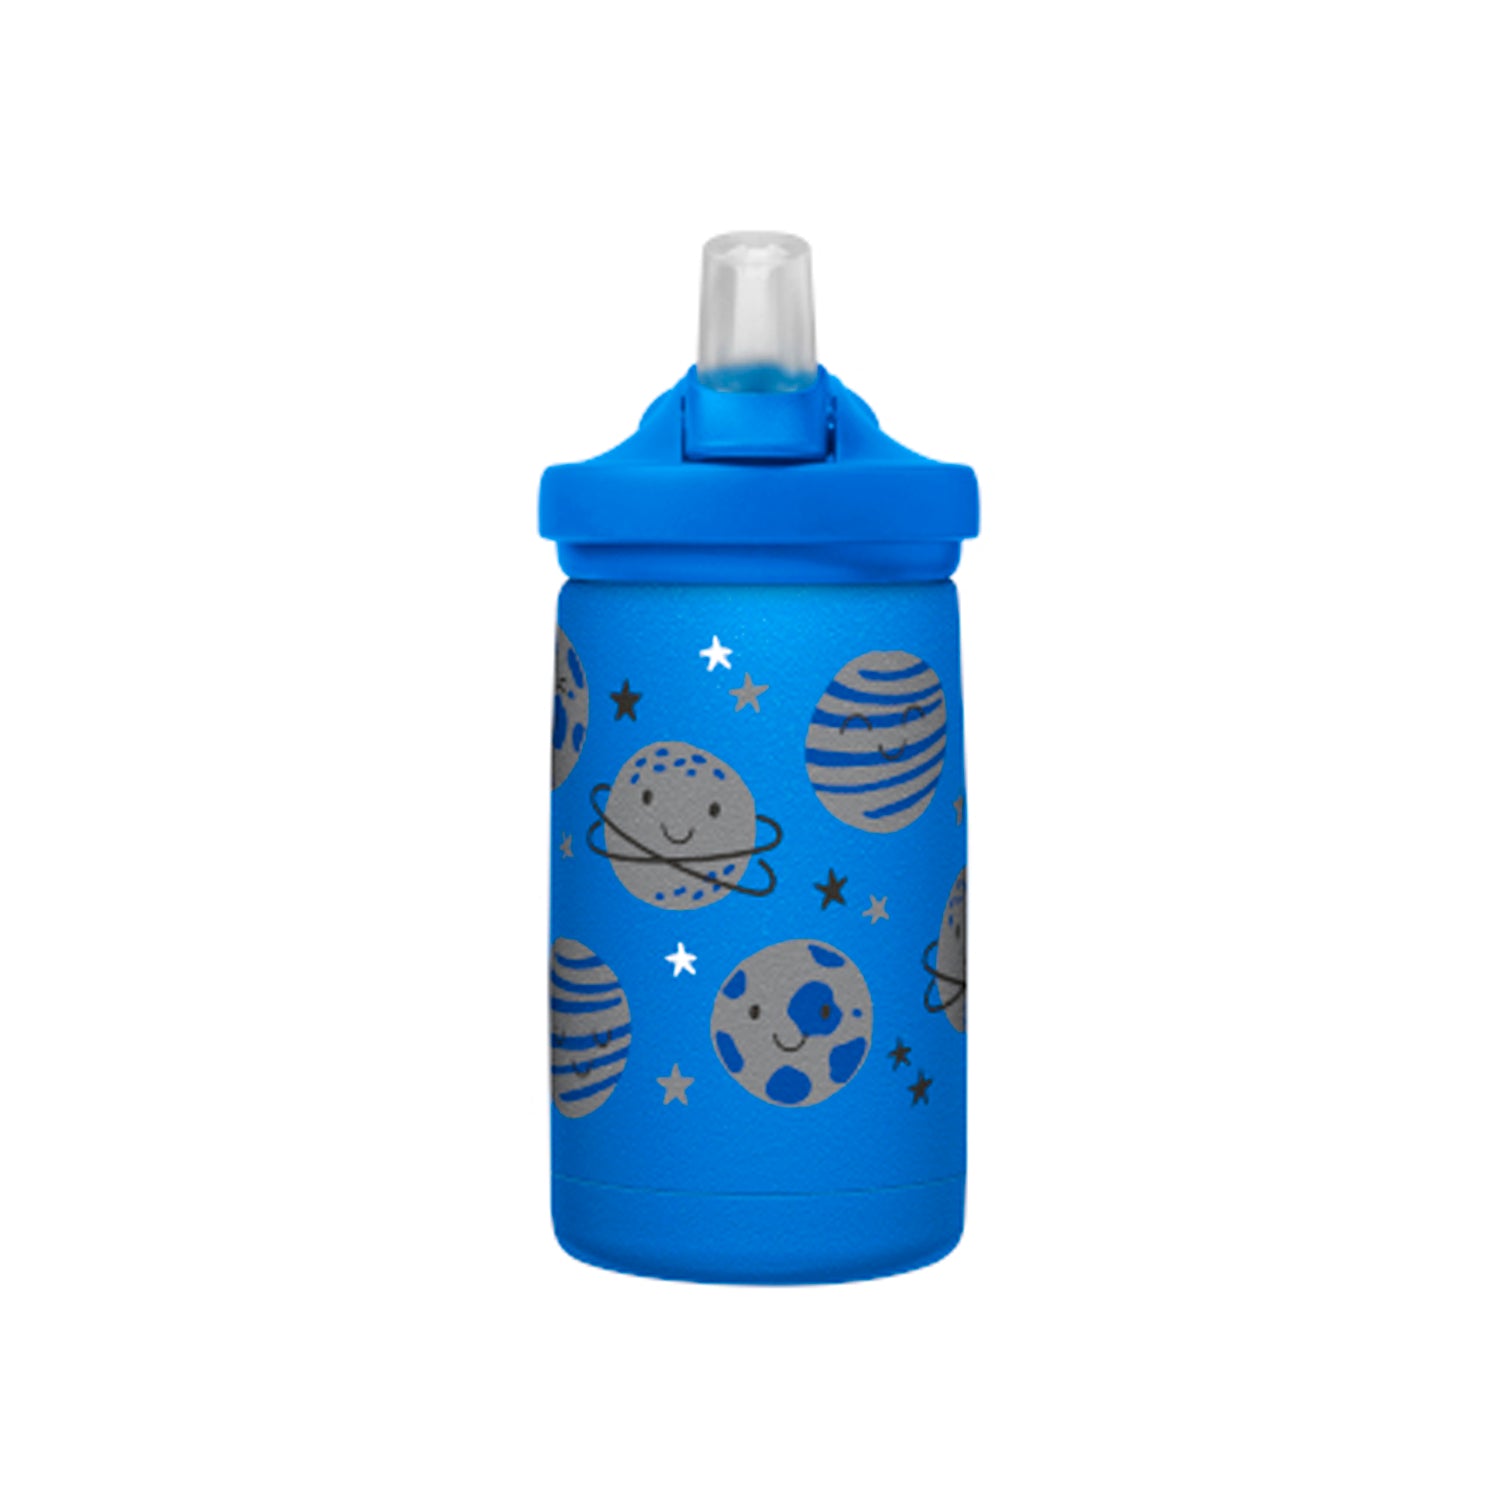 Camelbak EDDY+Kids Vacuum Insulated Stainless Steel Bottle 20oz, Space Smiles - Best Price online Prokicksports.com